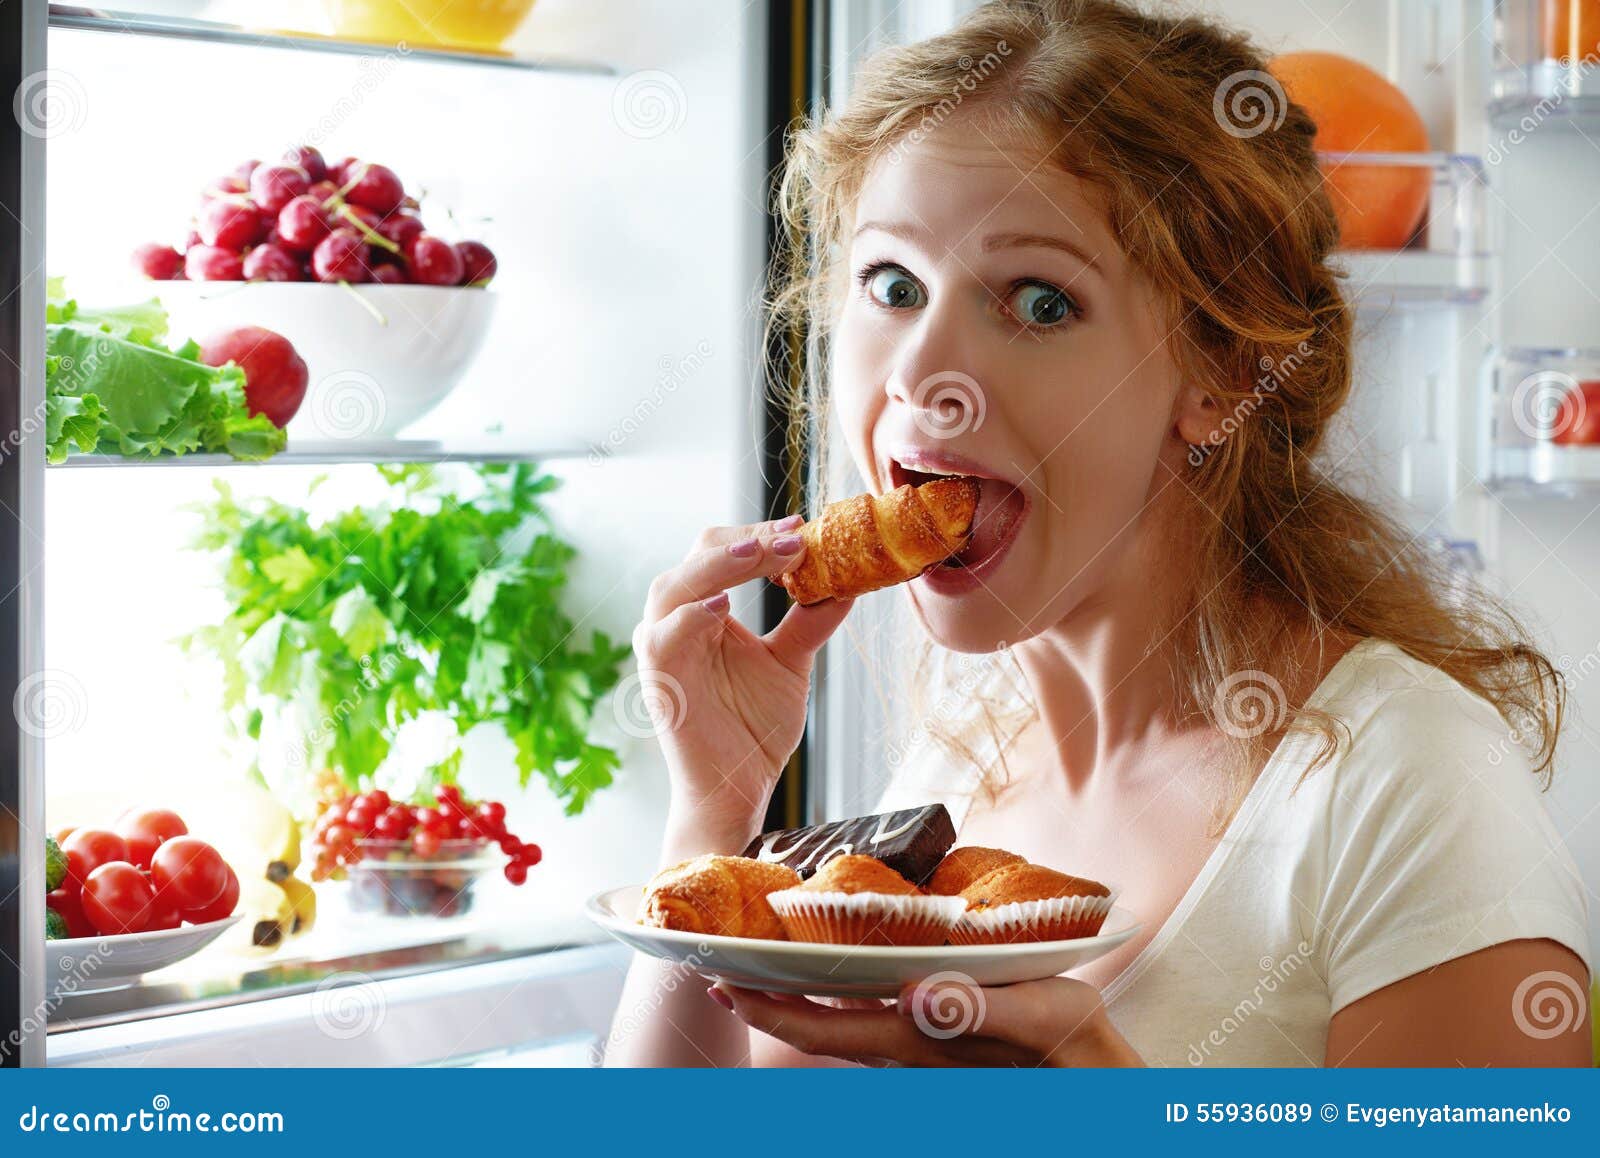 woman eats night stole the refrigerator